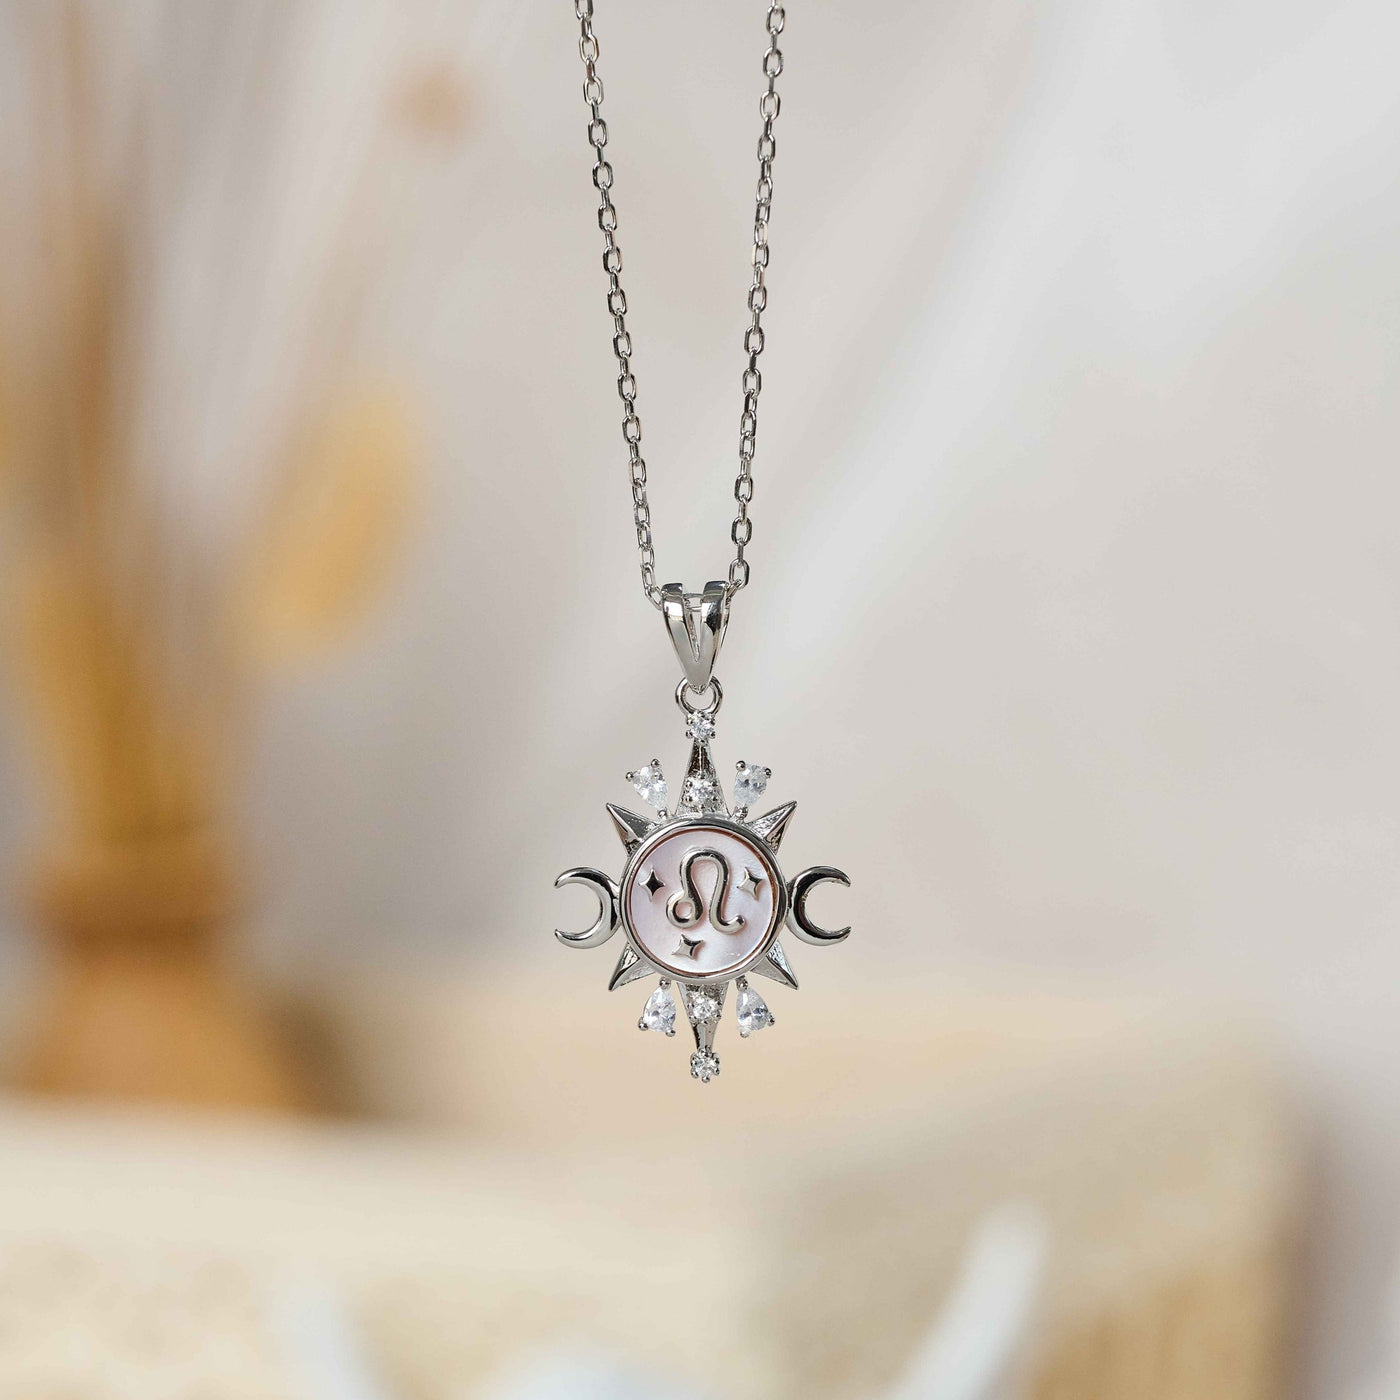 Celestial Horoscope Pendant - Leo - Necklaces - 2